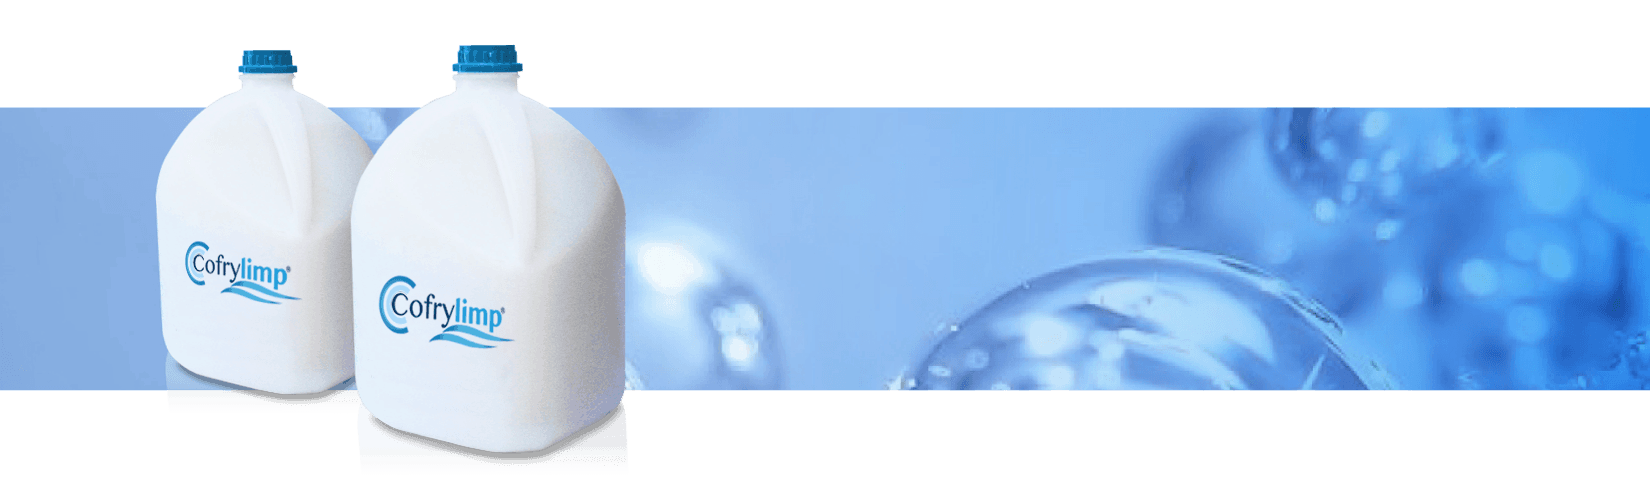 Cofrylimp Productos de limpieza e higiene